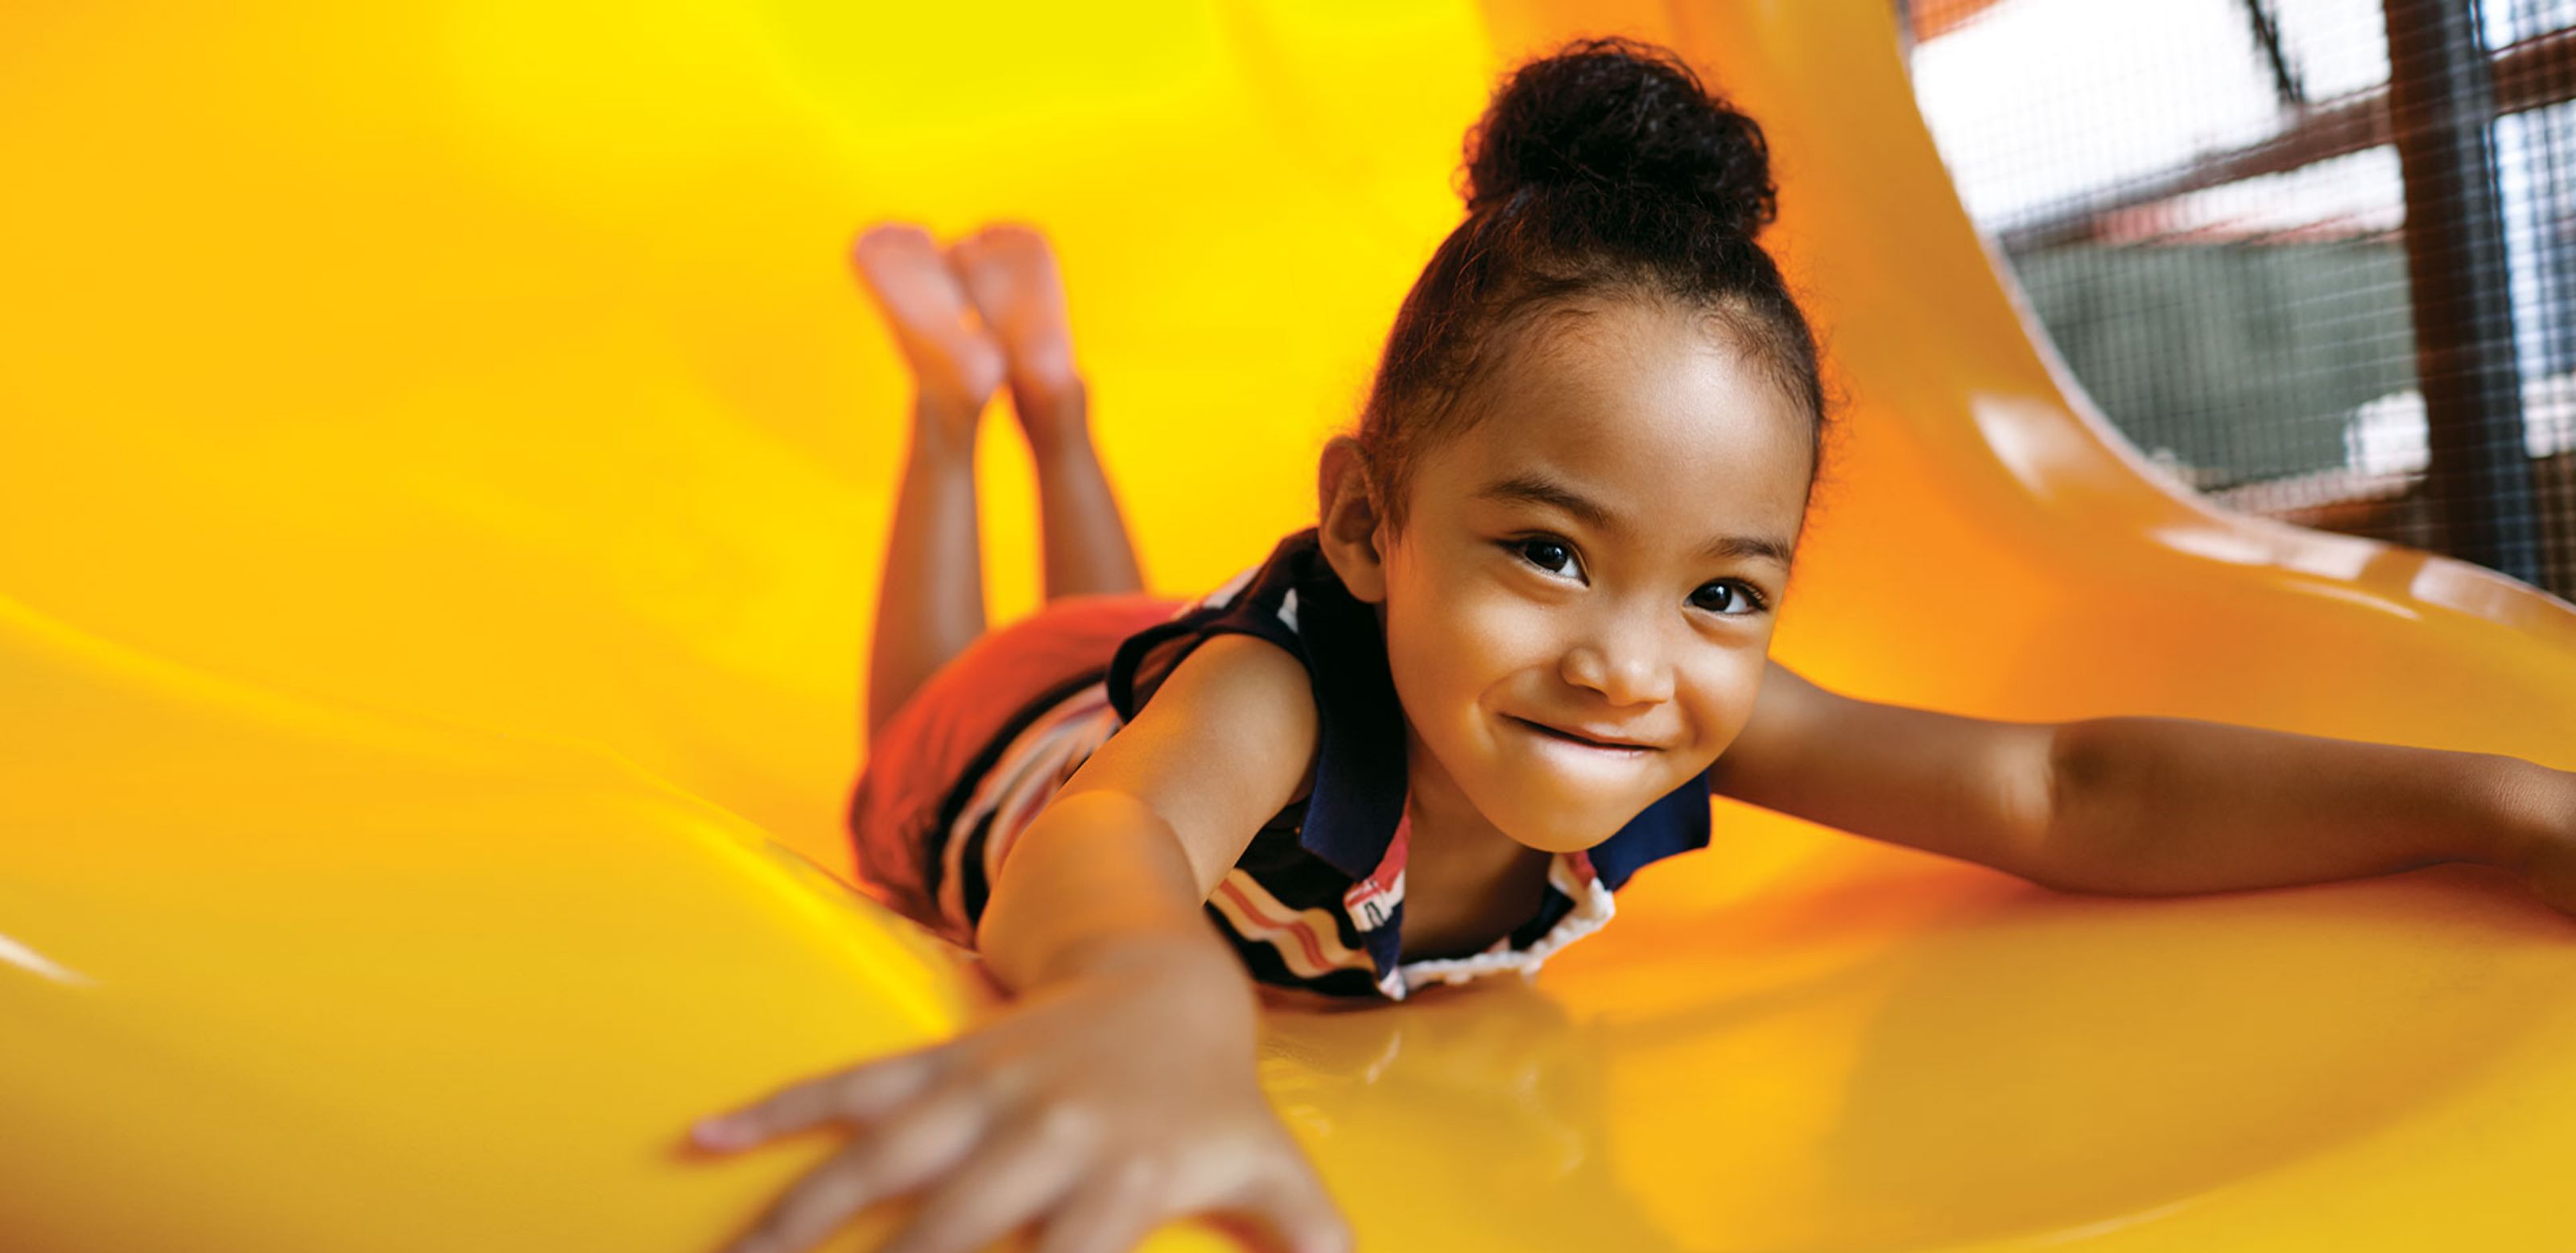 a small girl sliding down a slide